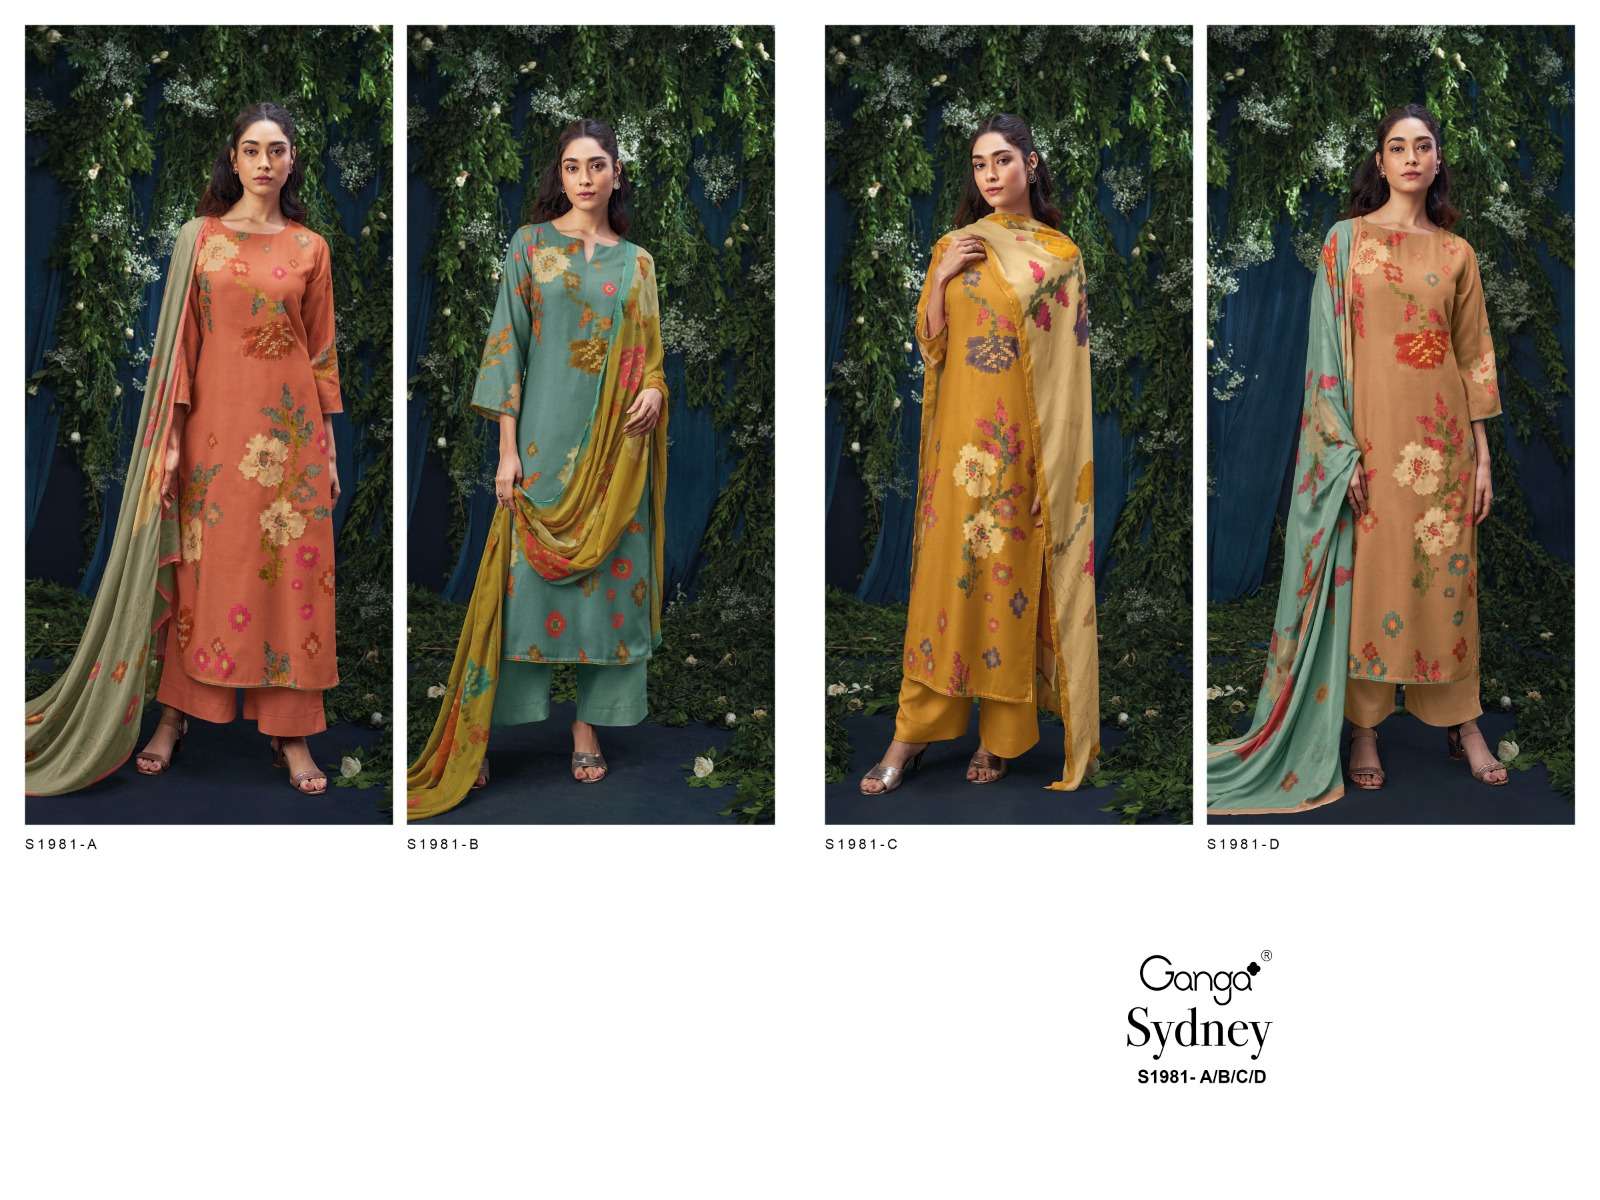 ganga sydney 1981 colour series designer wedding wear printed pakistani salwar kameez at wholesaler price india